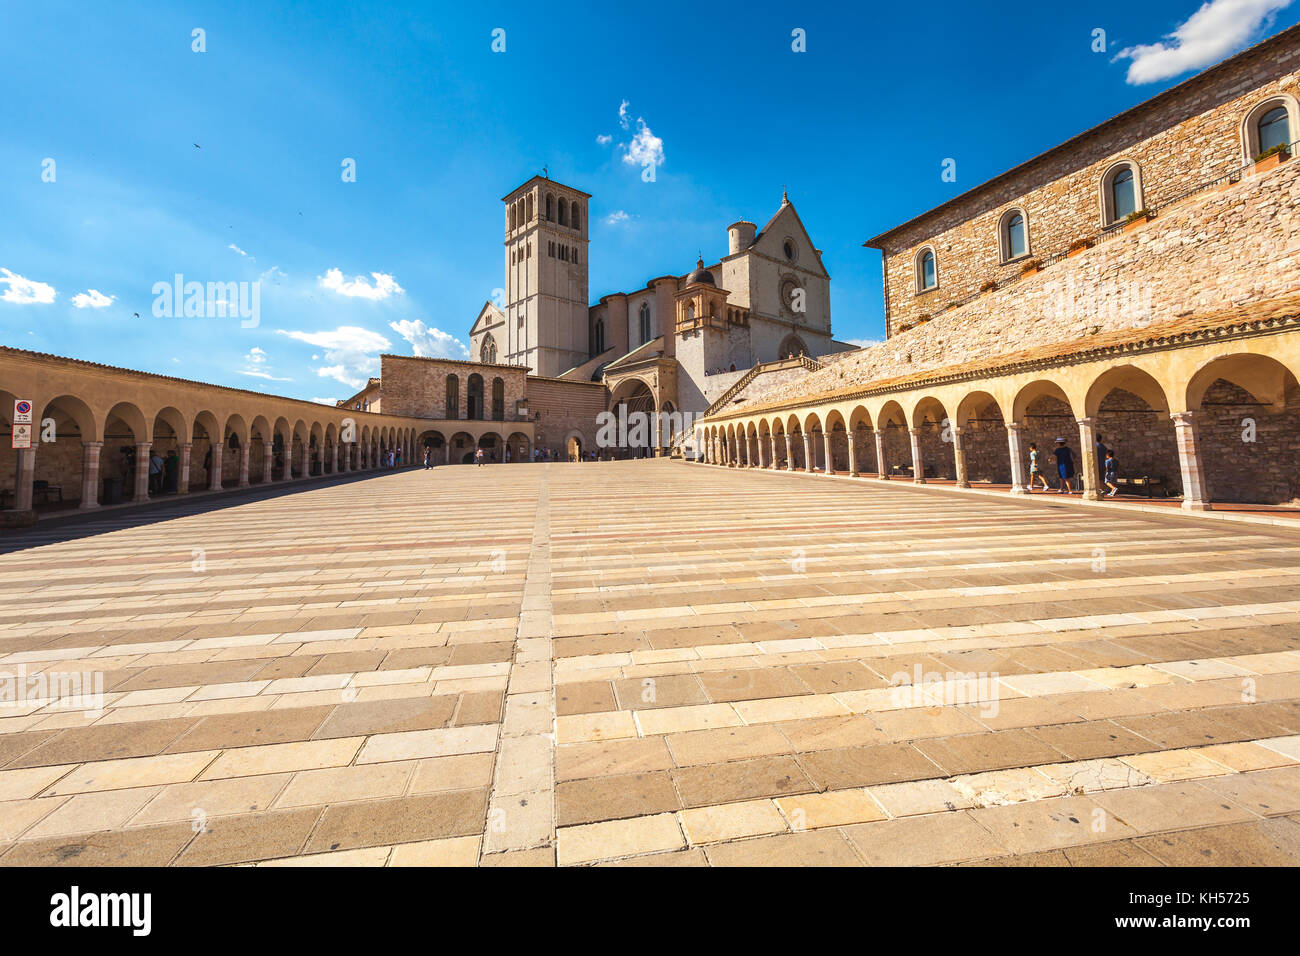 Basilica of San Francesco d'Assisi in Piazza inferiore di San Francesco in Assisi, Italy Stock Photo